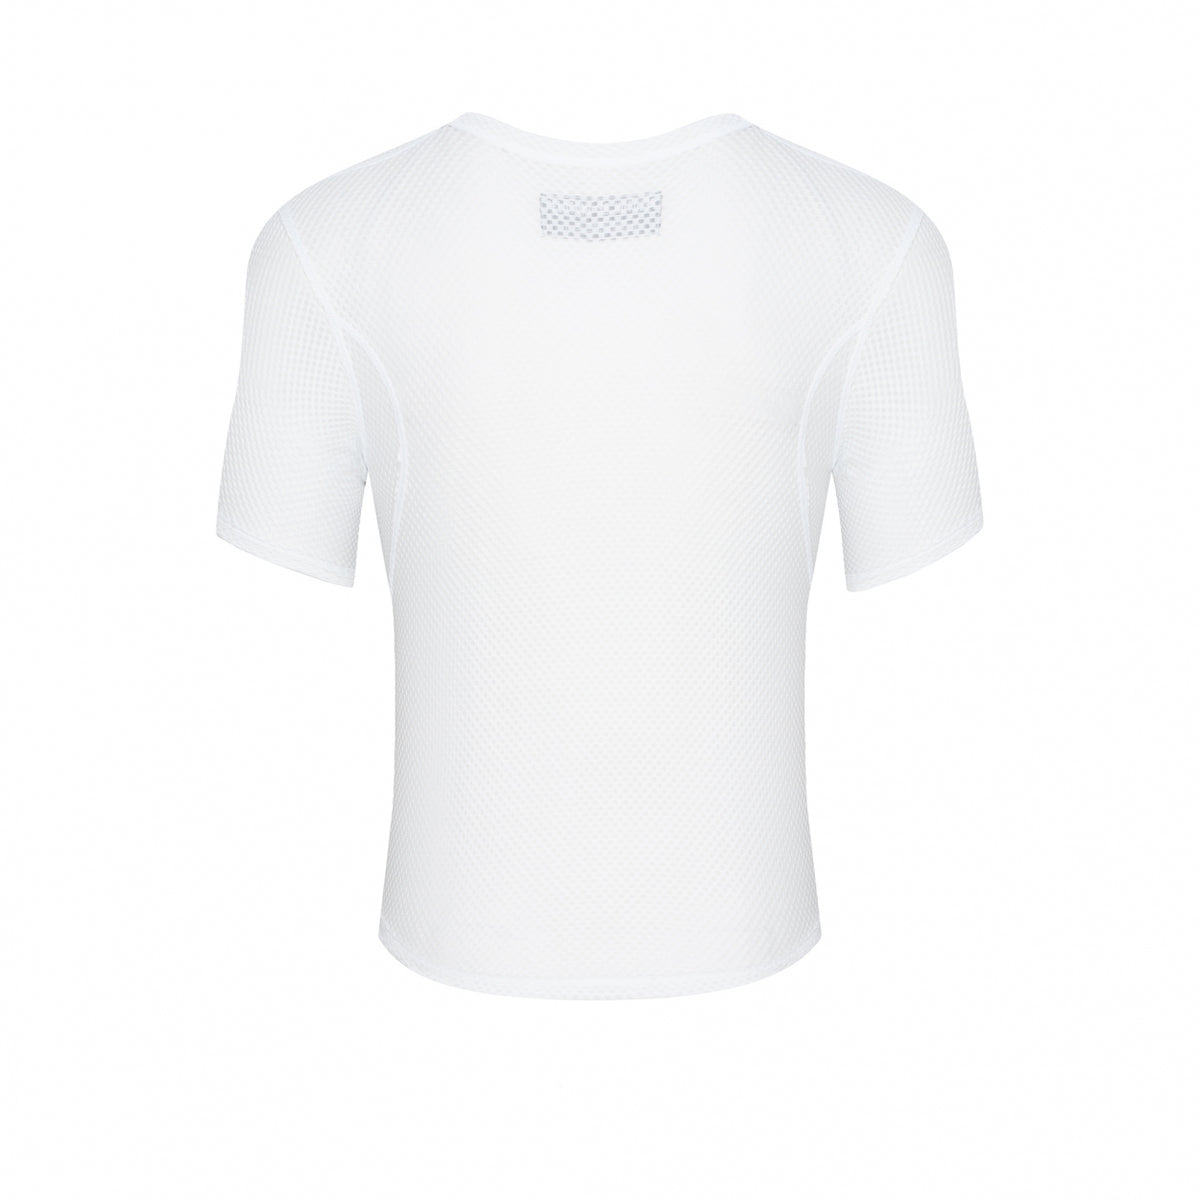 Domestique Short Sleeve Baselayer | White